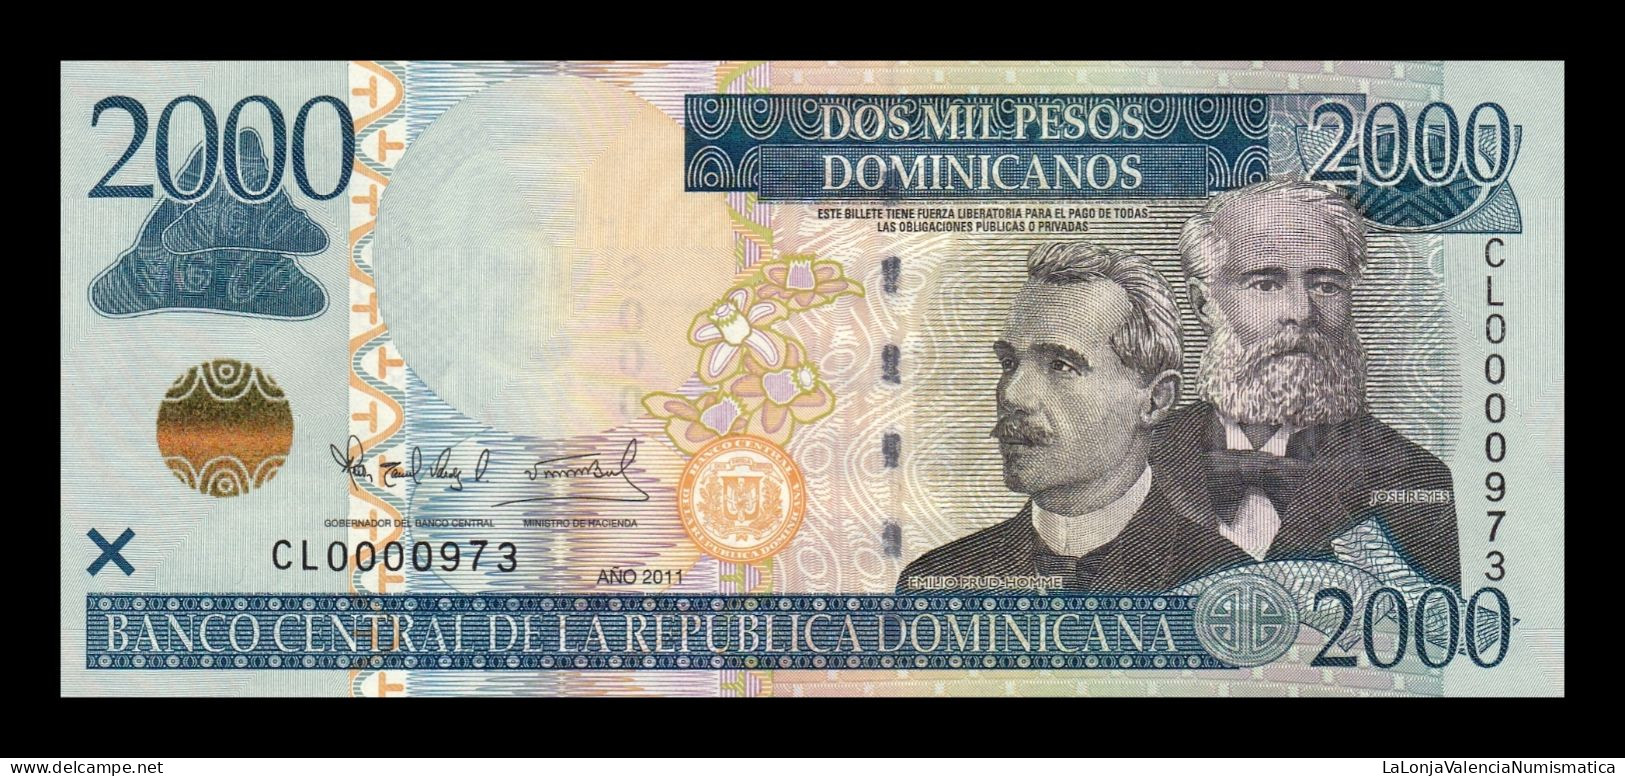 República Dominicana 2000 Pesos Dominicanos 2011 Pick 188a Low Serial 973 Sc Unc - Dominicaine